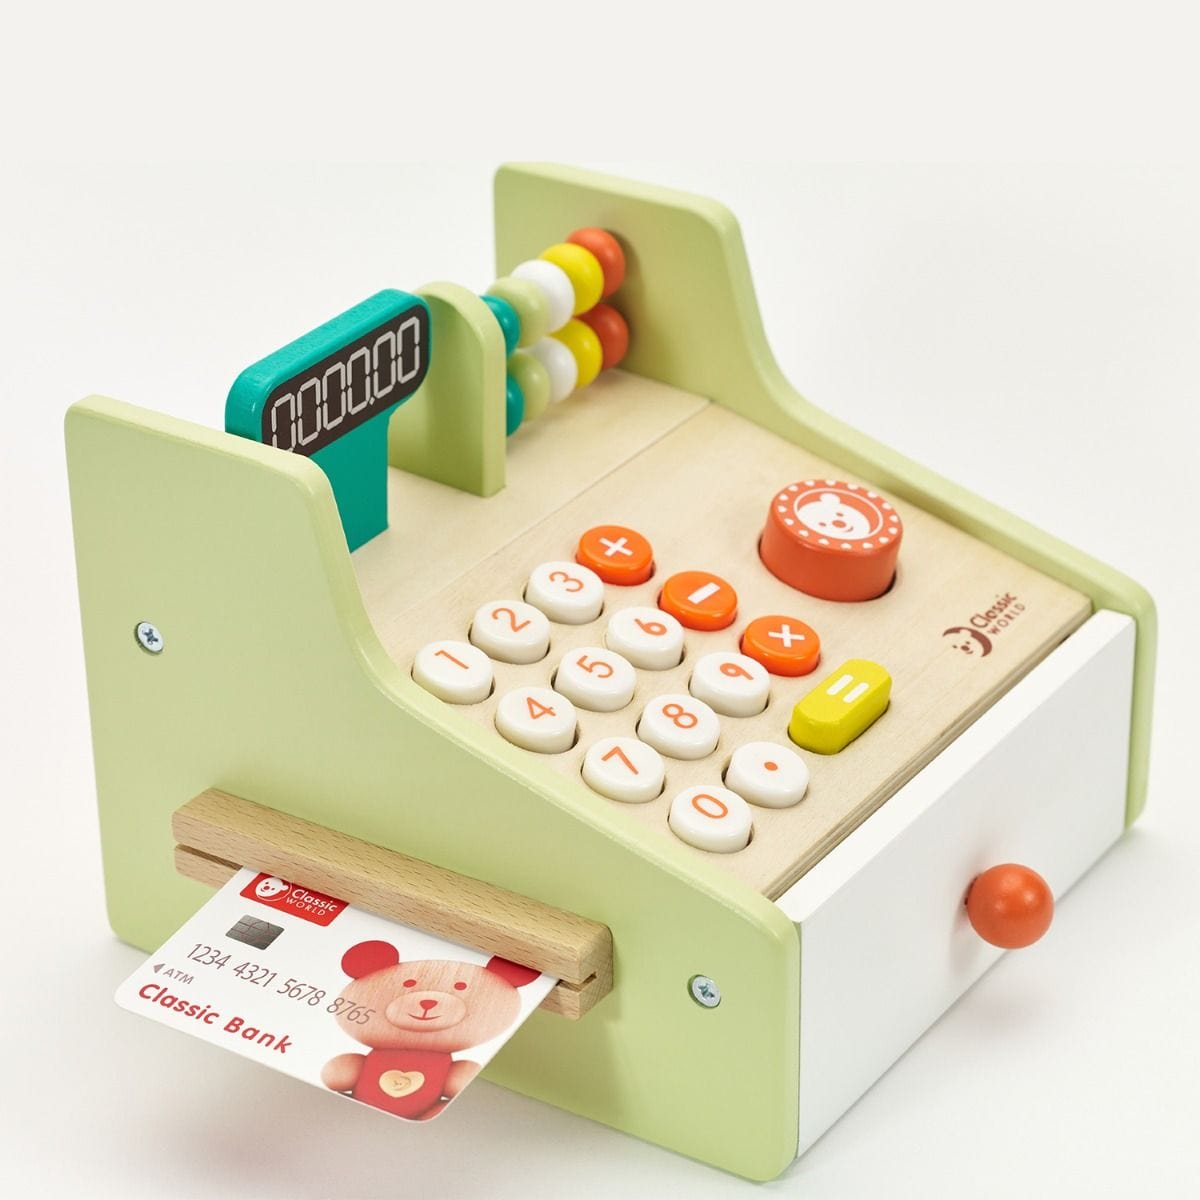 Classic World Toys Cash Register